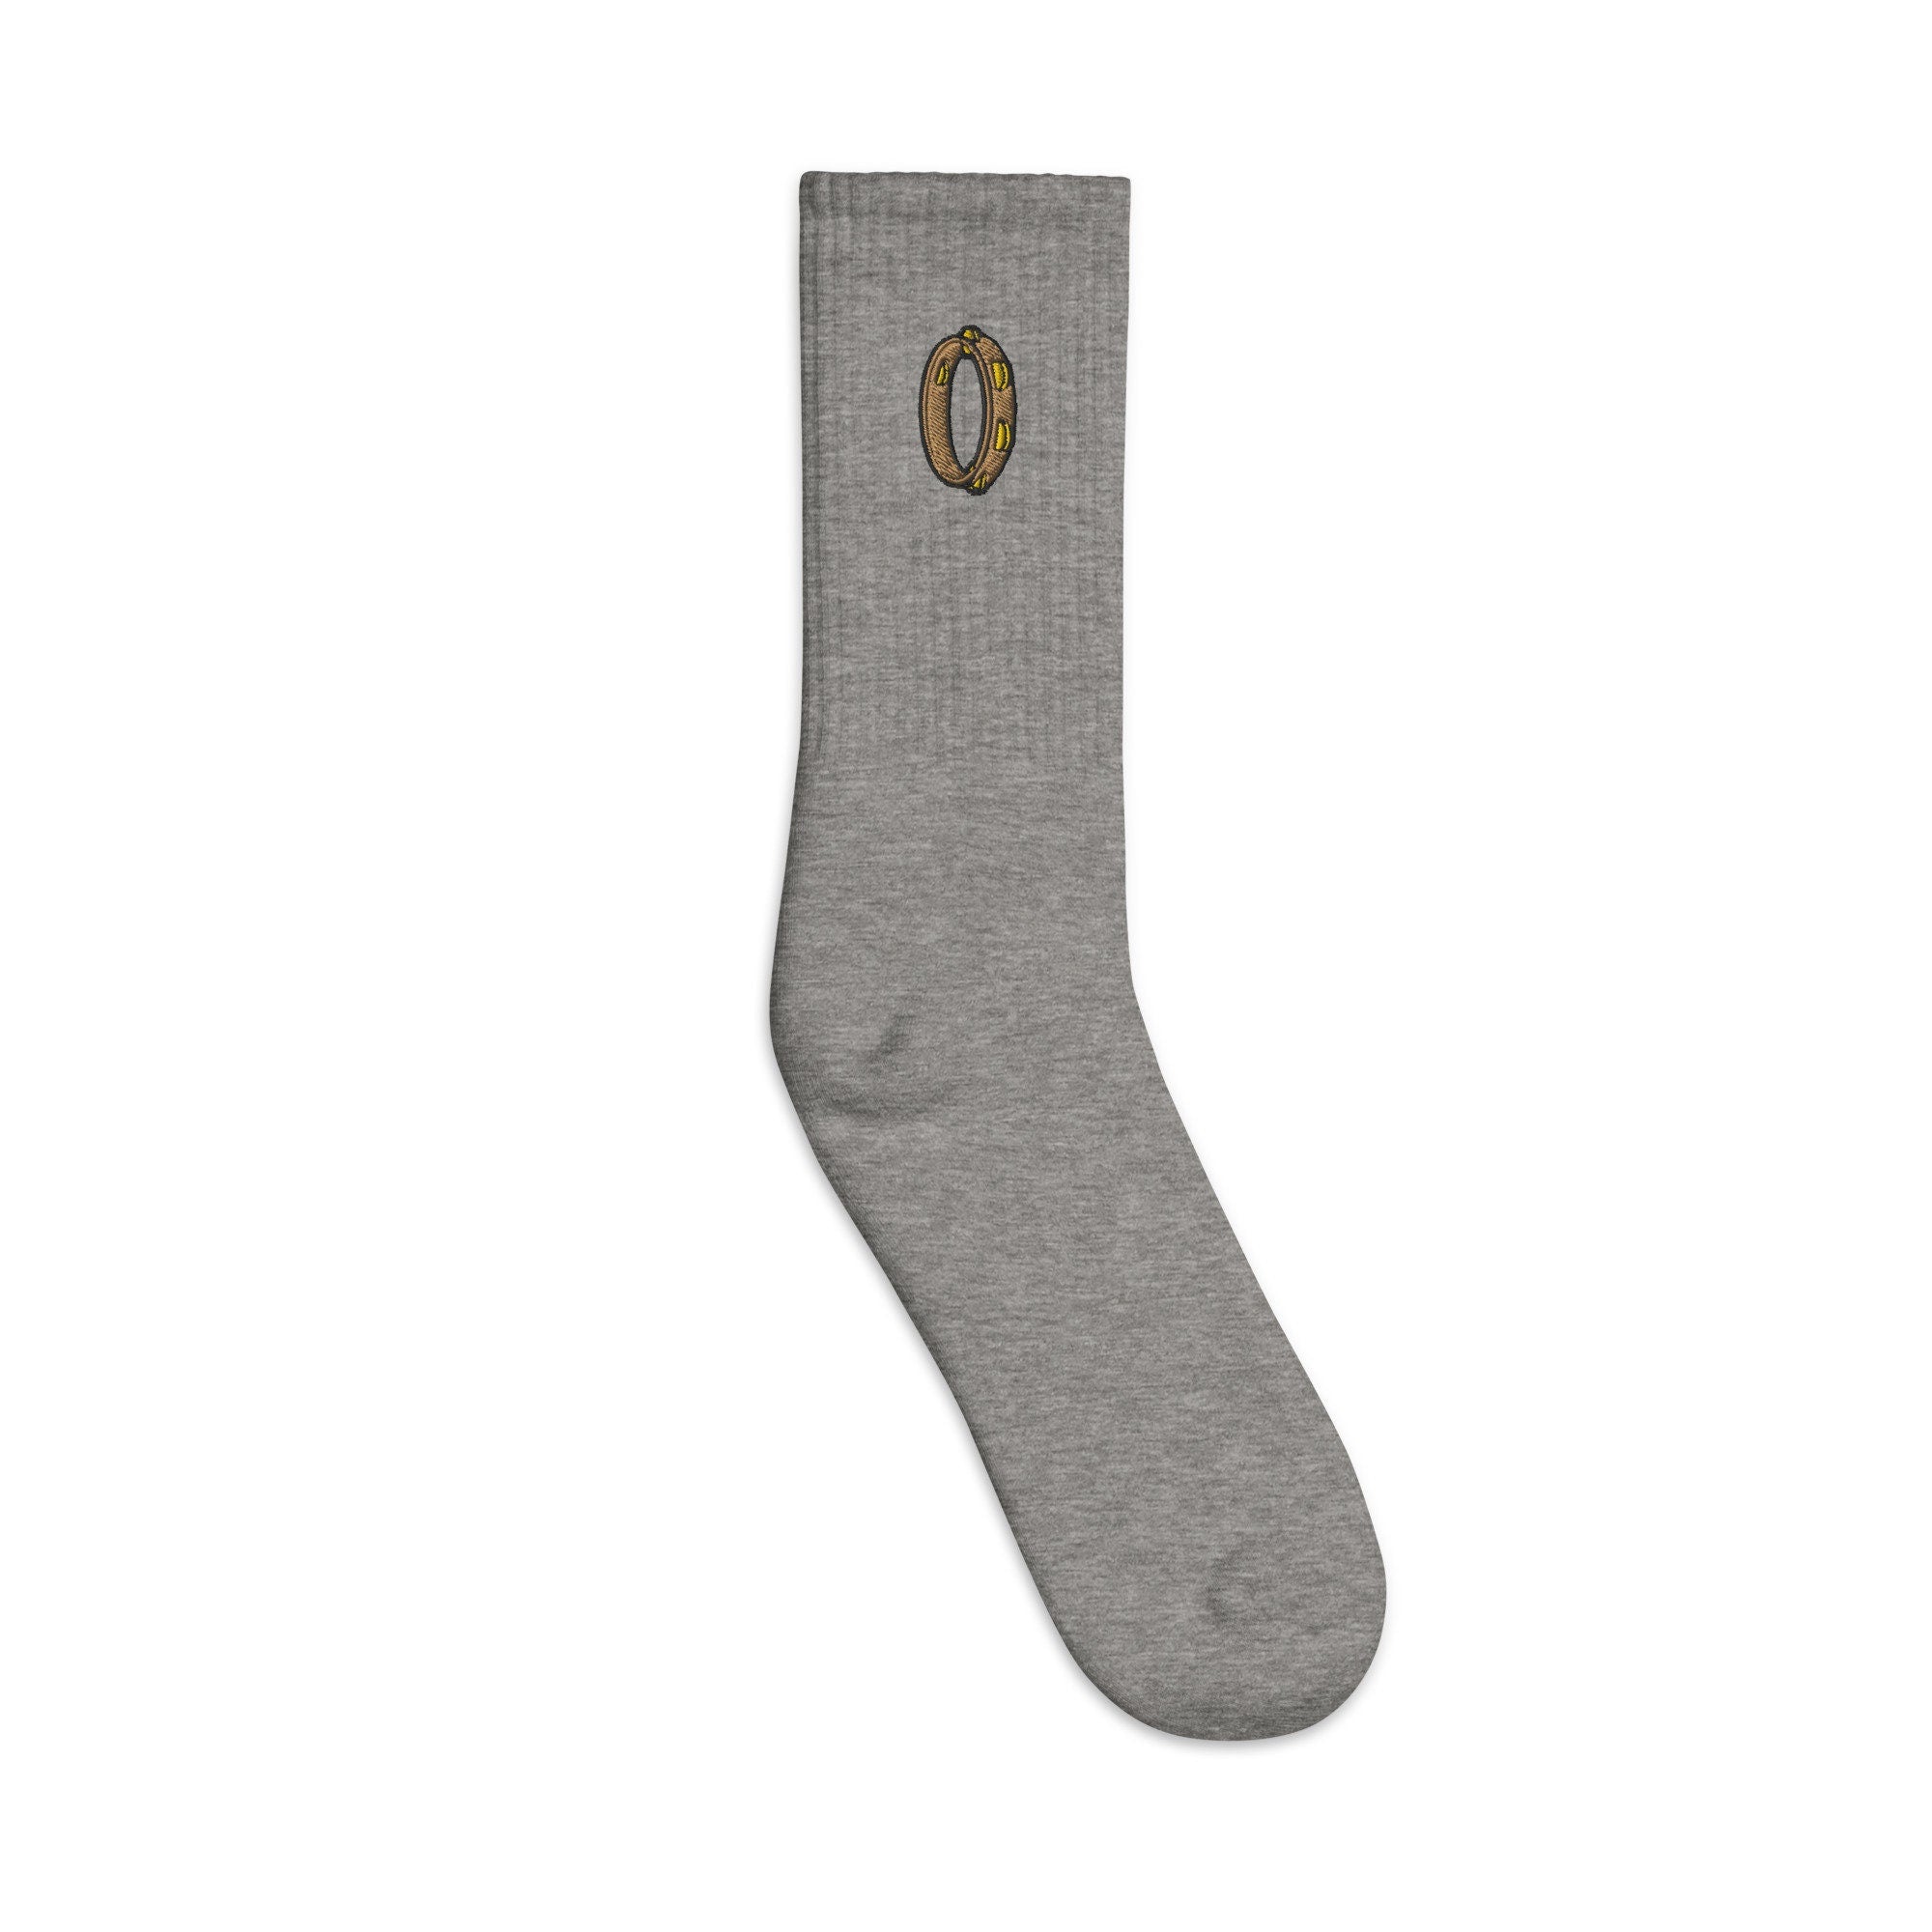 Tamborine Embroidered Socks, Premium Embroidered Socks, Long Socks Gift - Multiple Colors